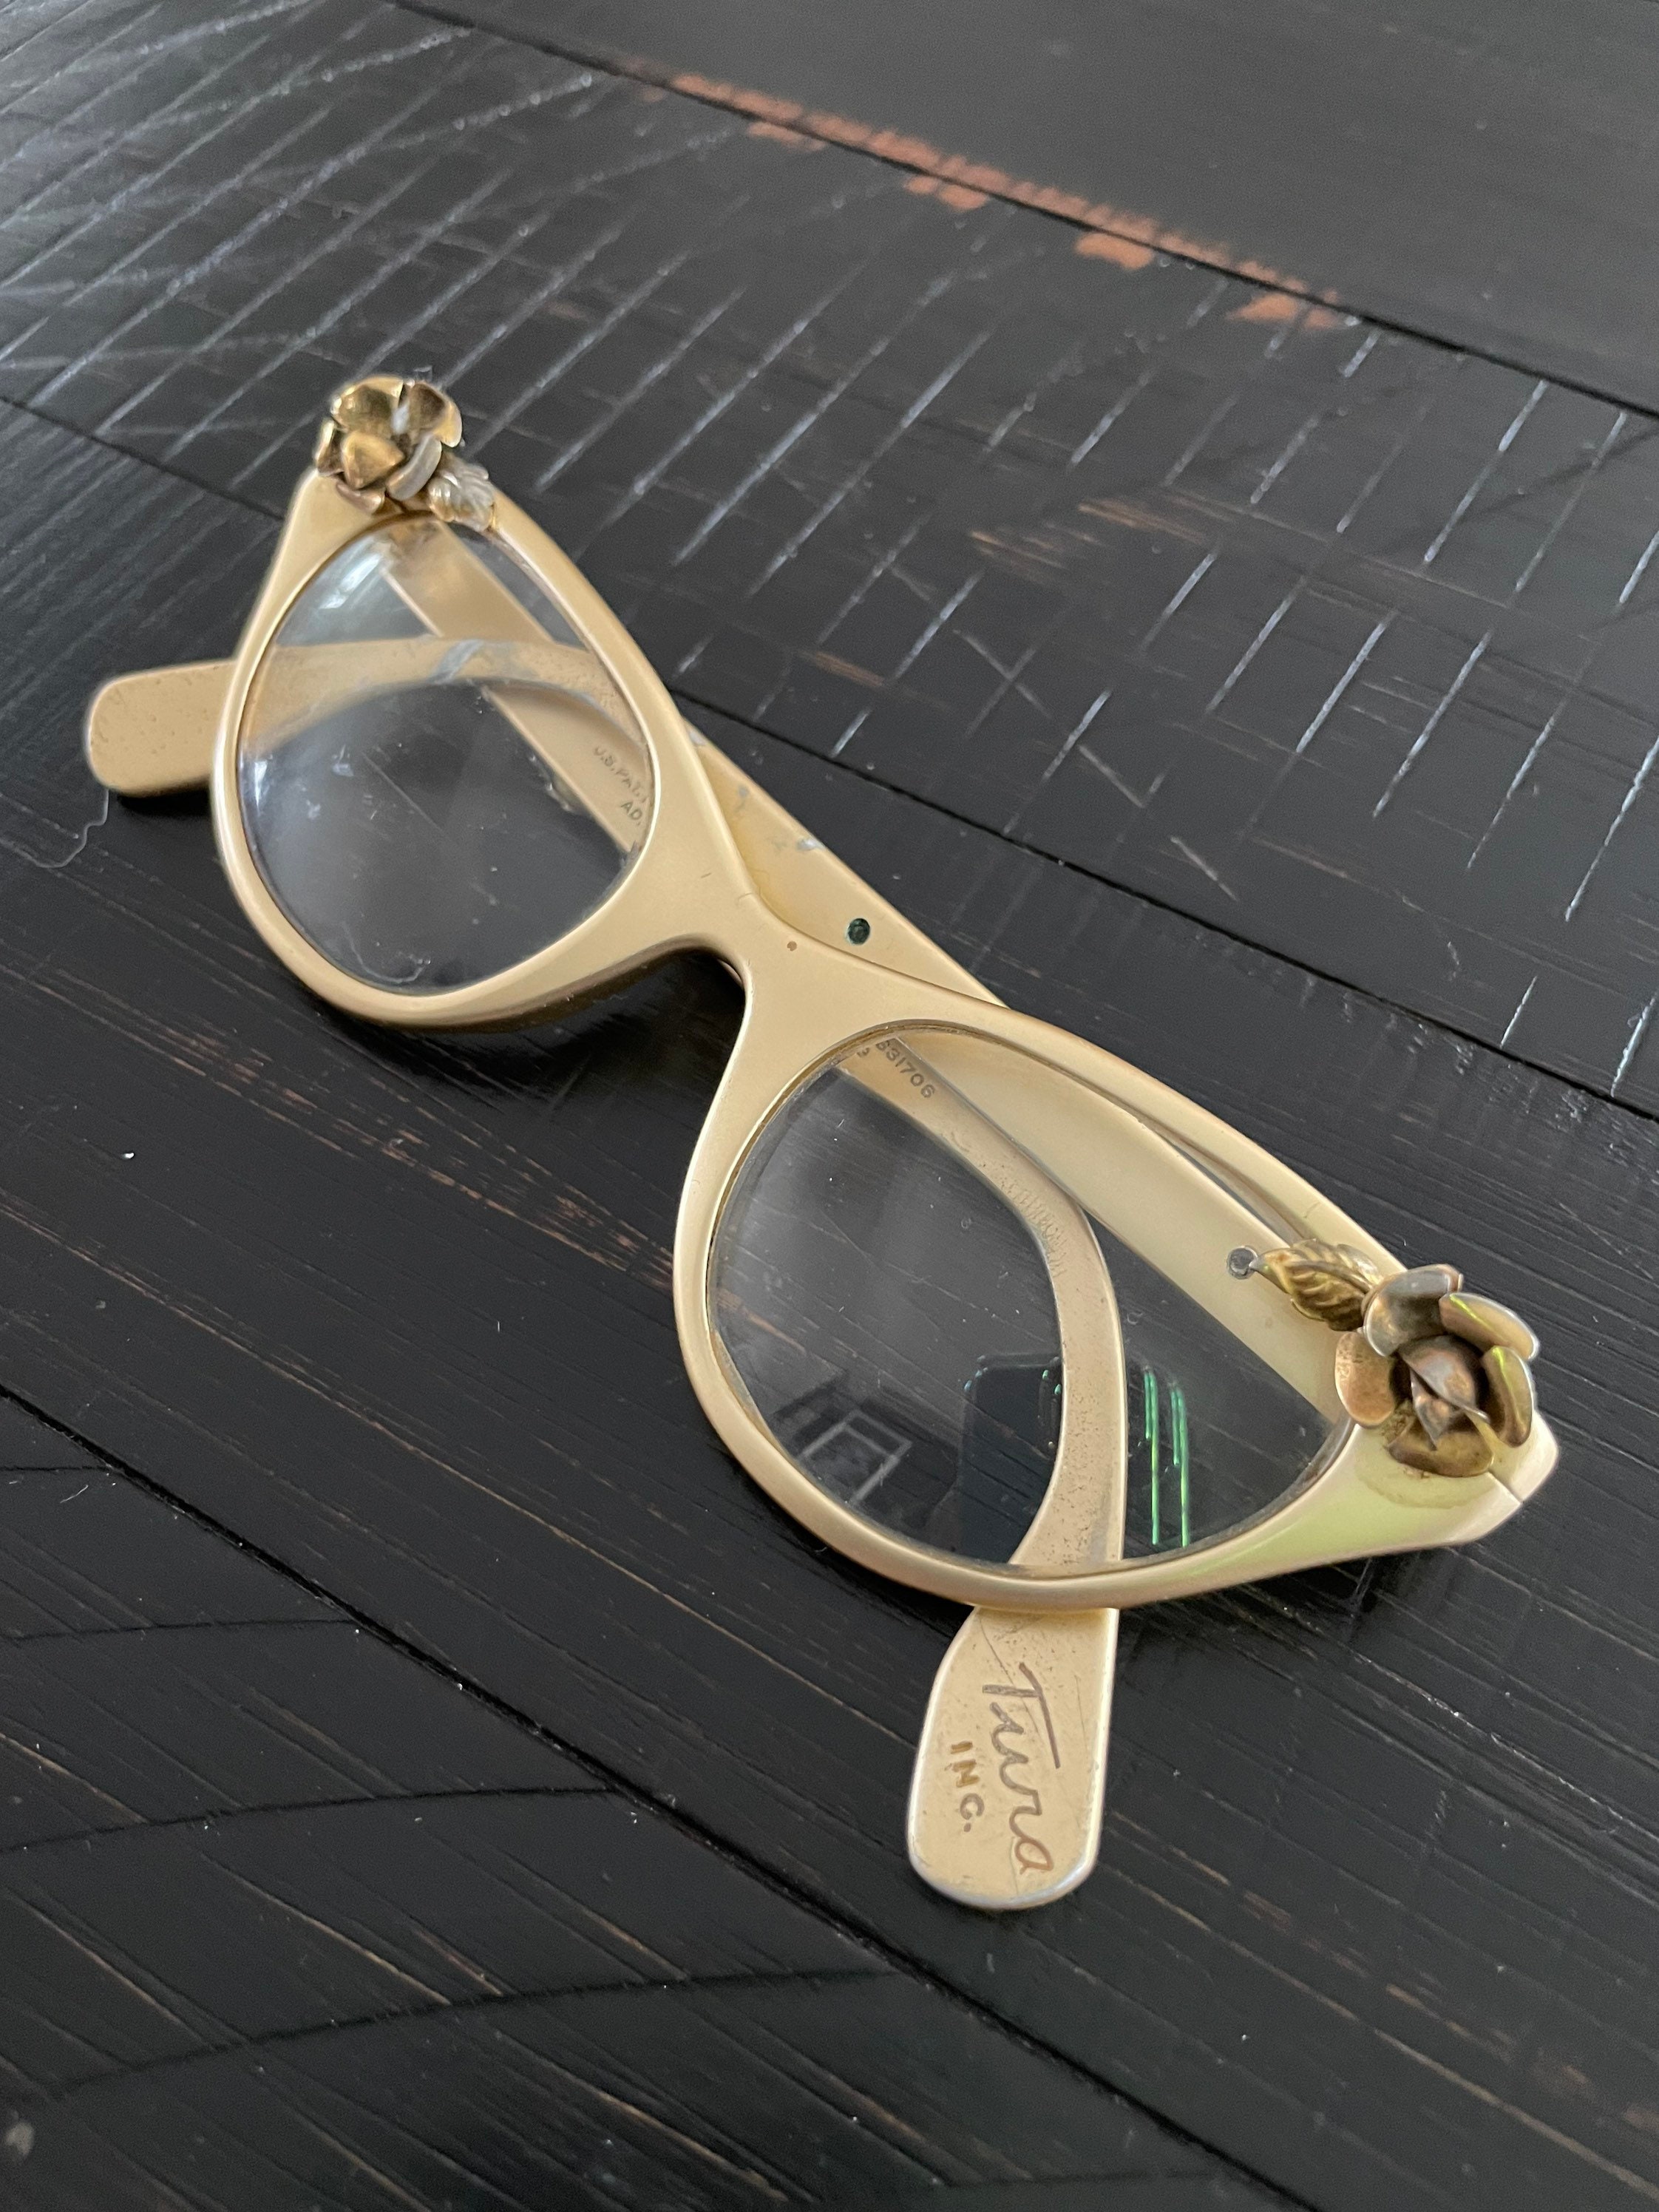 Tina Vintage Cat Eye Glasses Frames – Southood